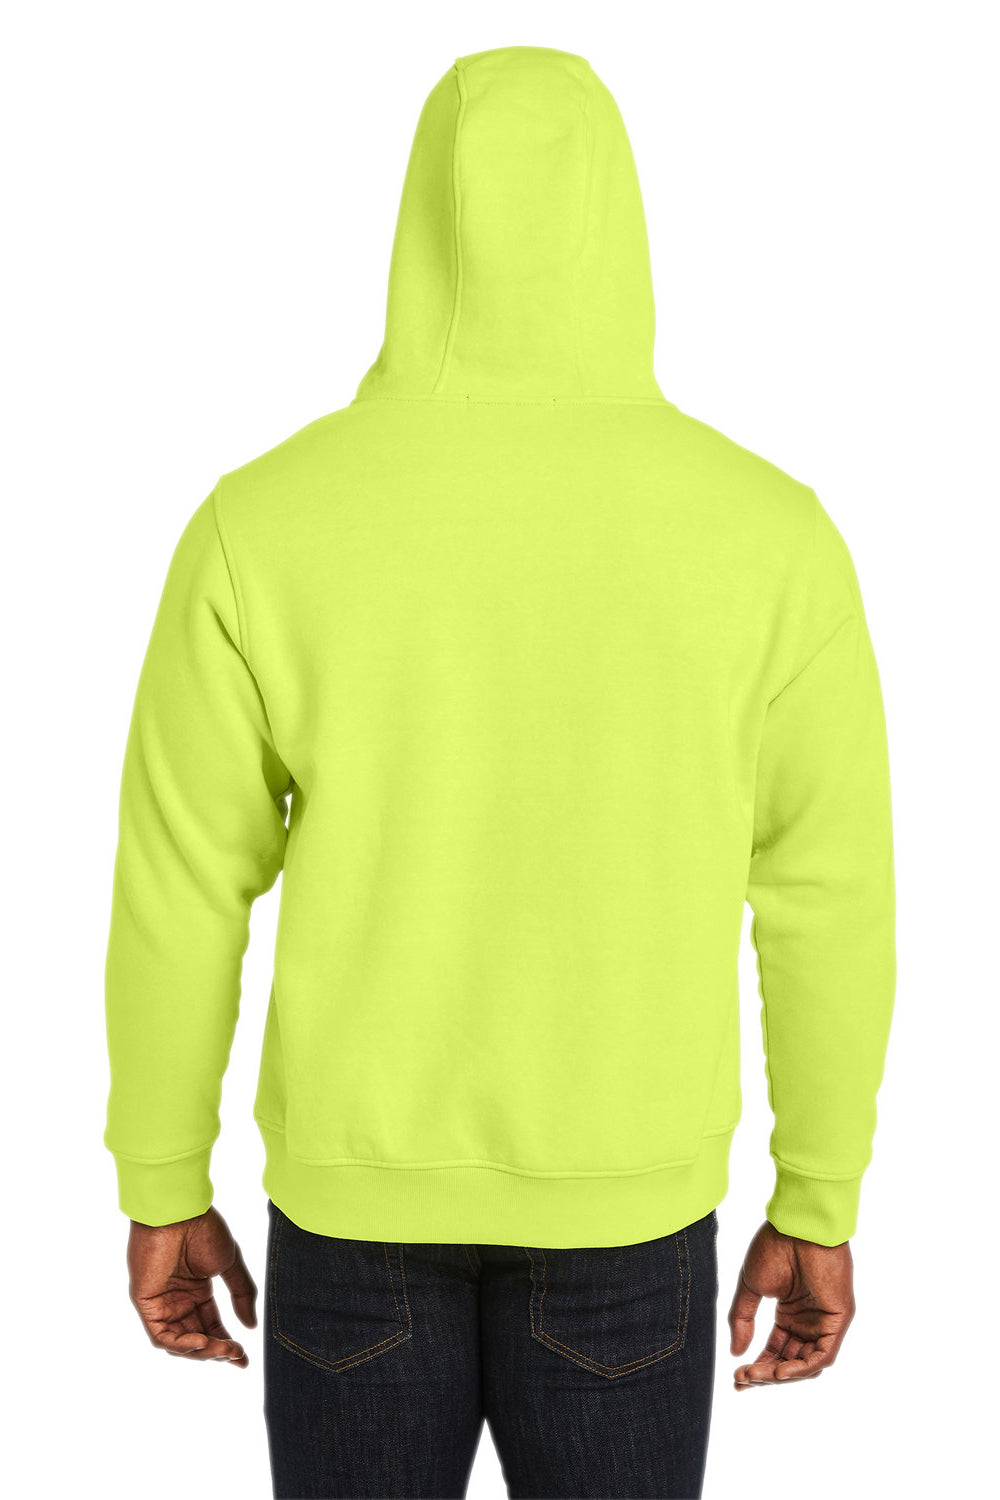 Harriton M711/M711T Mens Climabloc Full Zip Hooded Sweatshirt Hoodie Safety Yellow Back